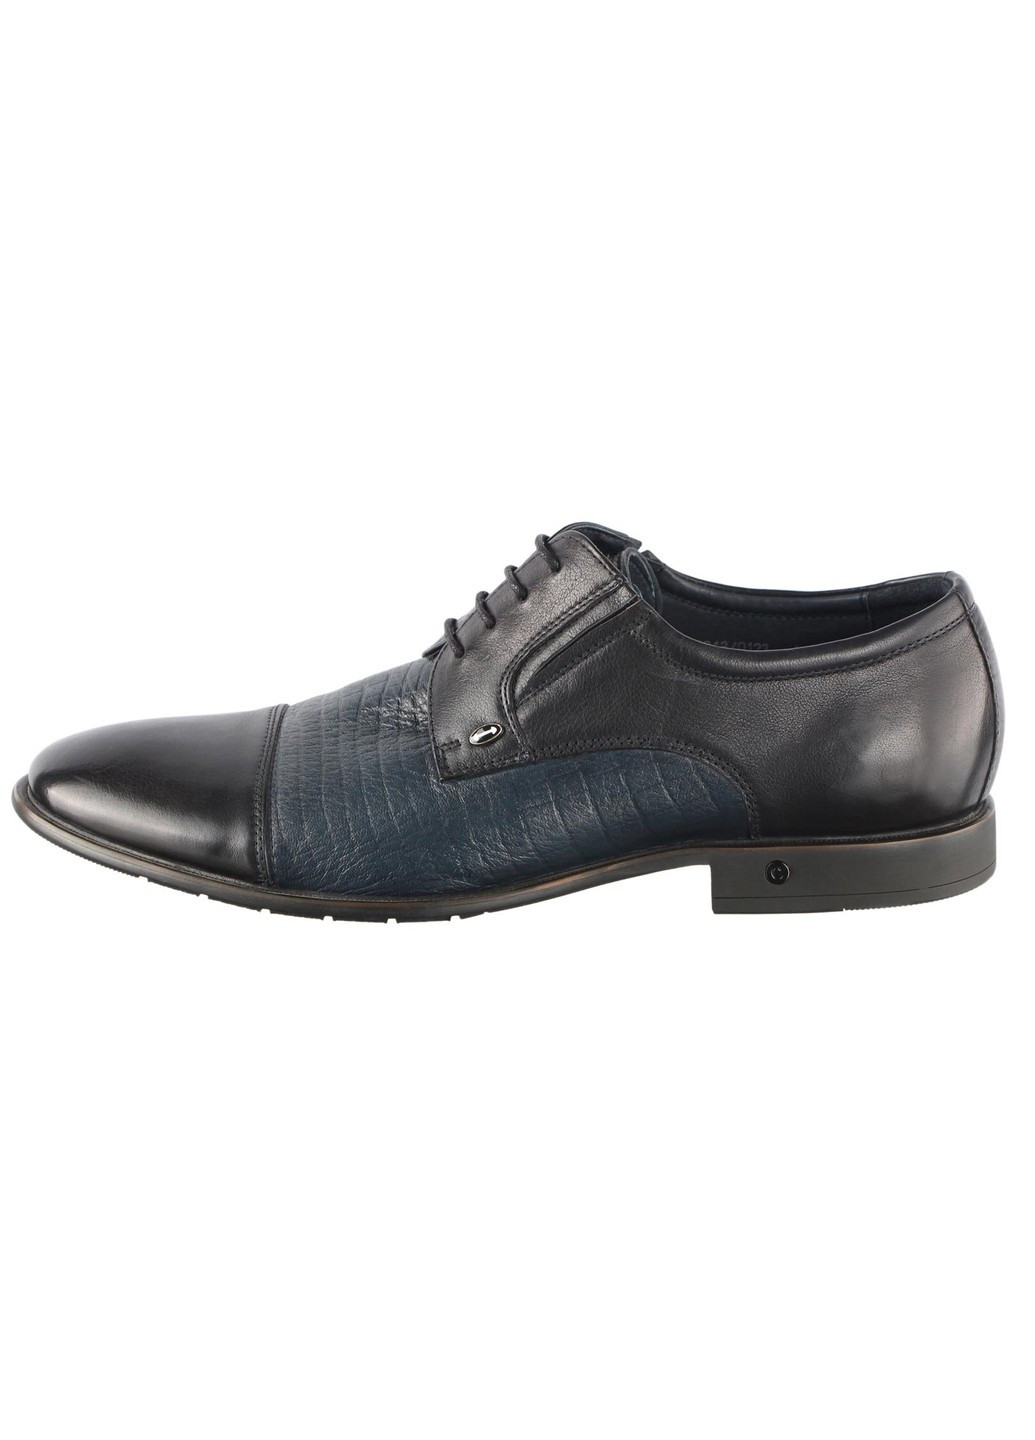 Синие мужские классические туфли 012013 Cosottinni на шнурках